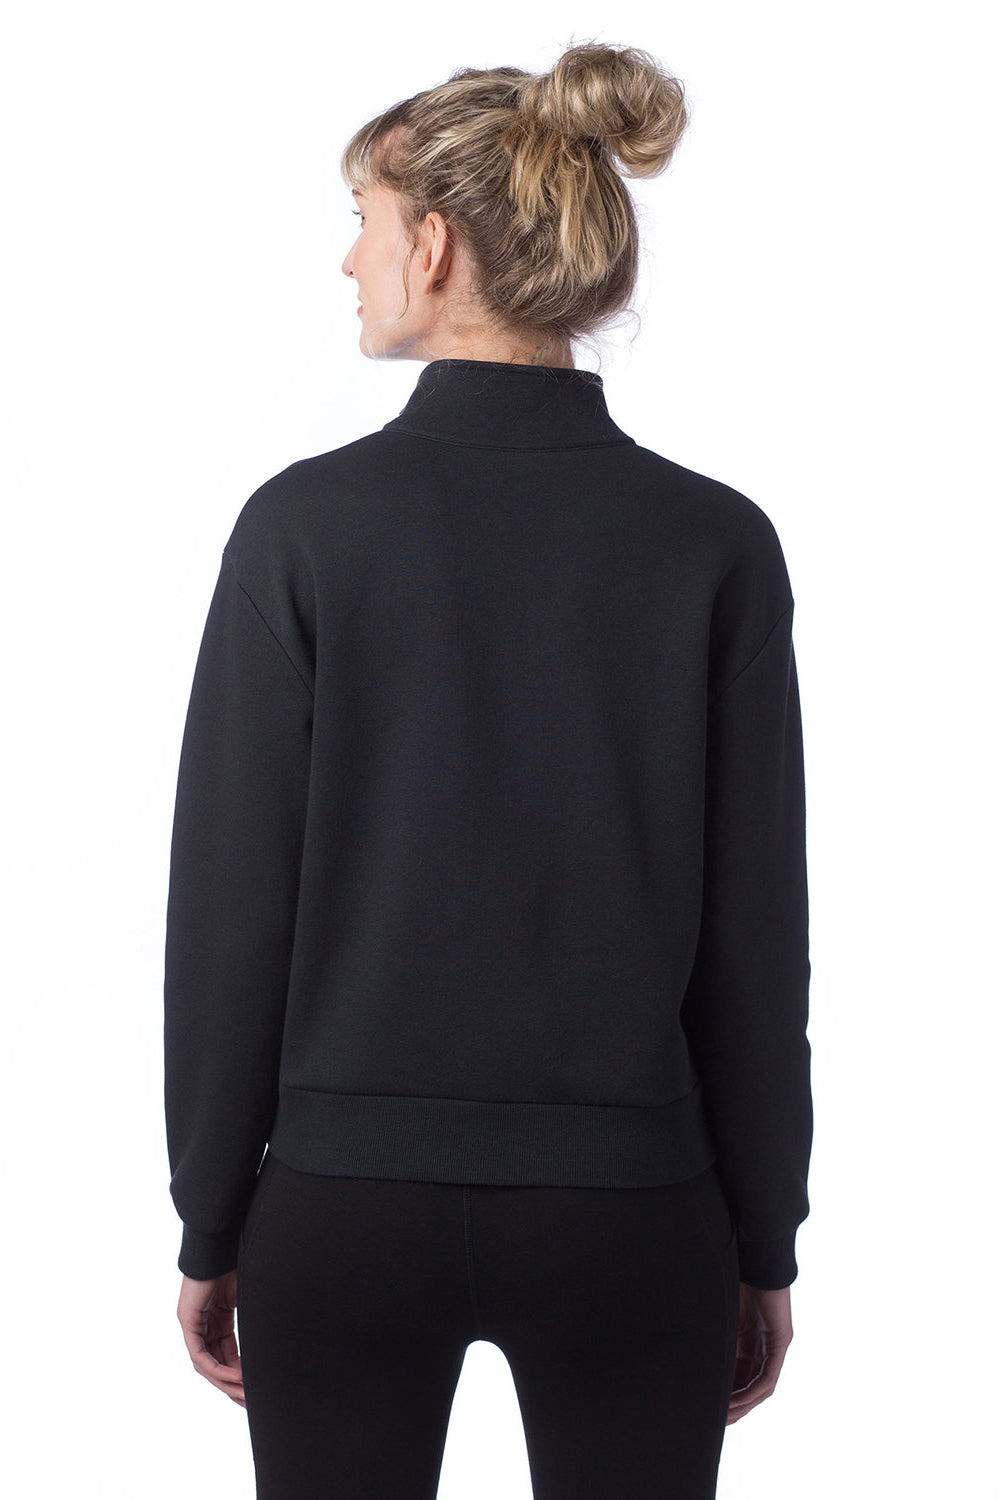 Alternative 8808PF Womens Eco Cozy Fleece Mock Neck 1/4 Zip Sweatshirt Black Model Back